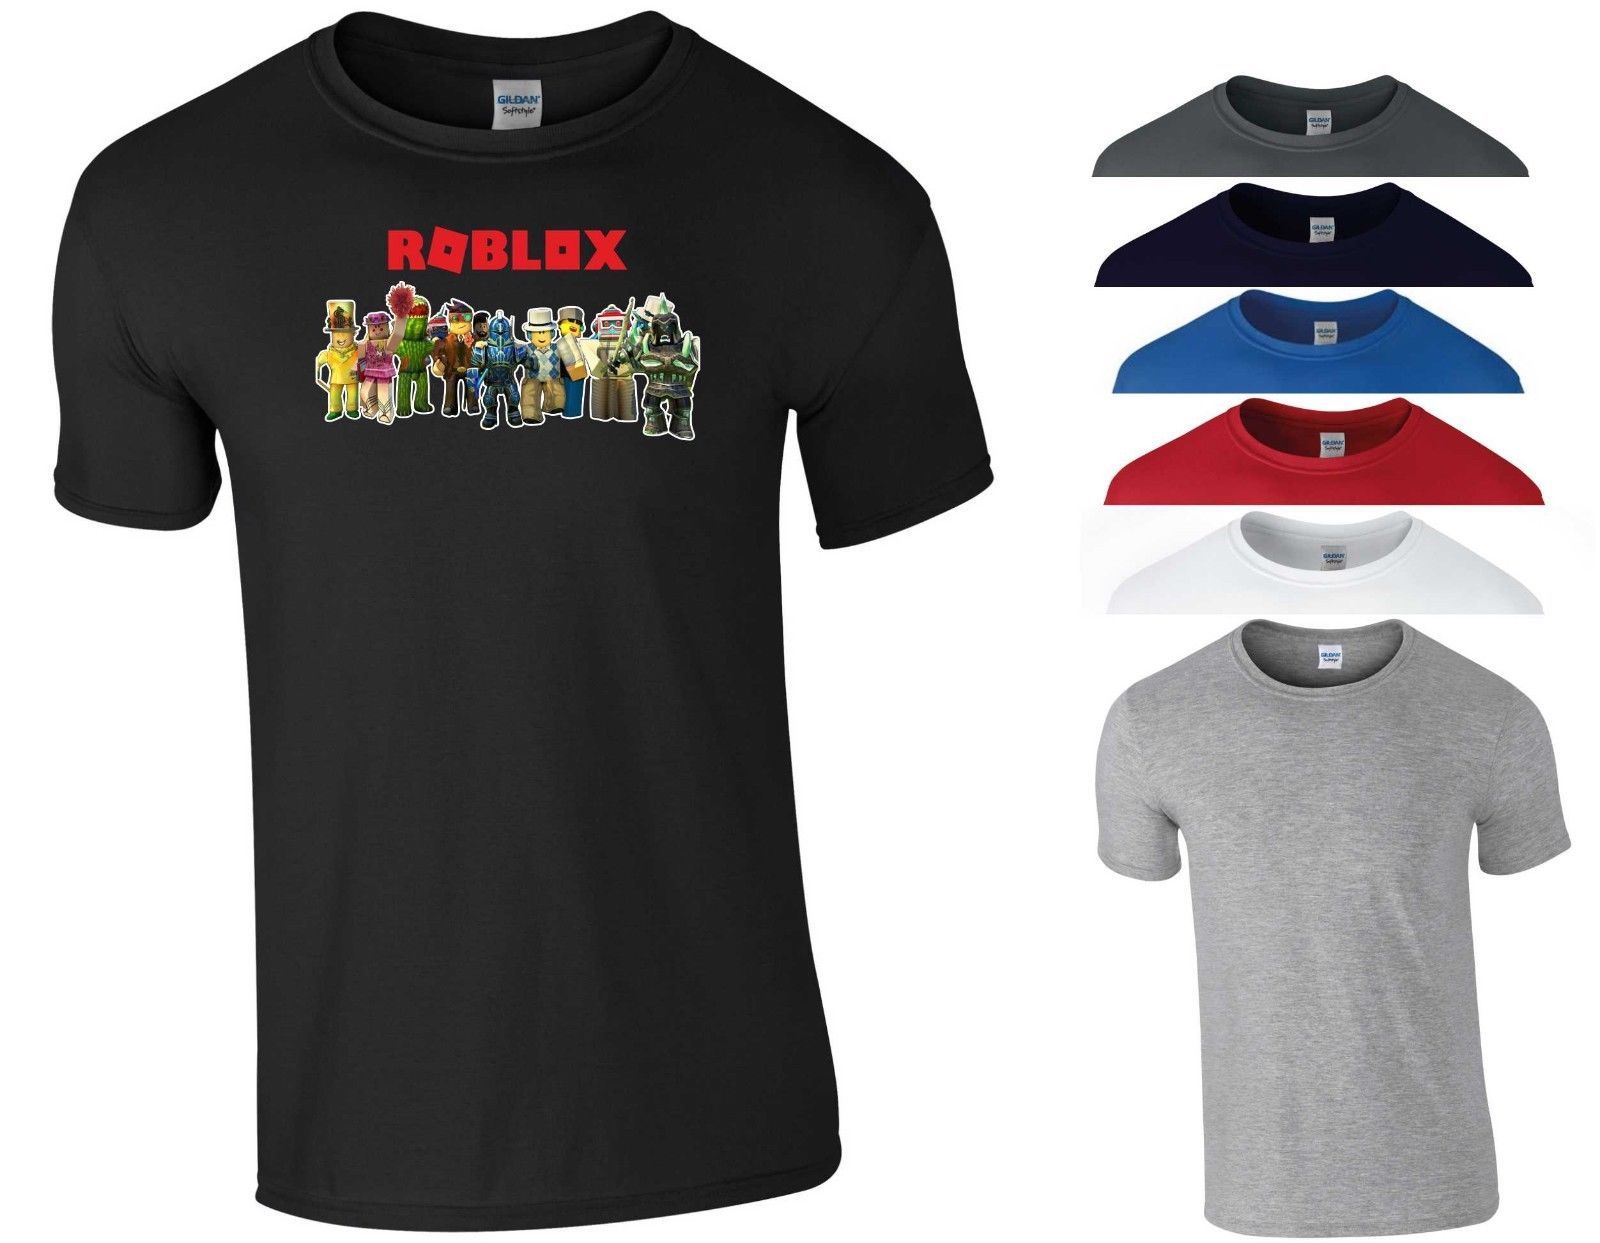 Roblox Copying Shirts